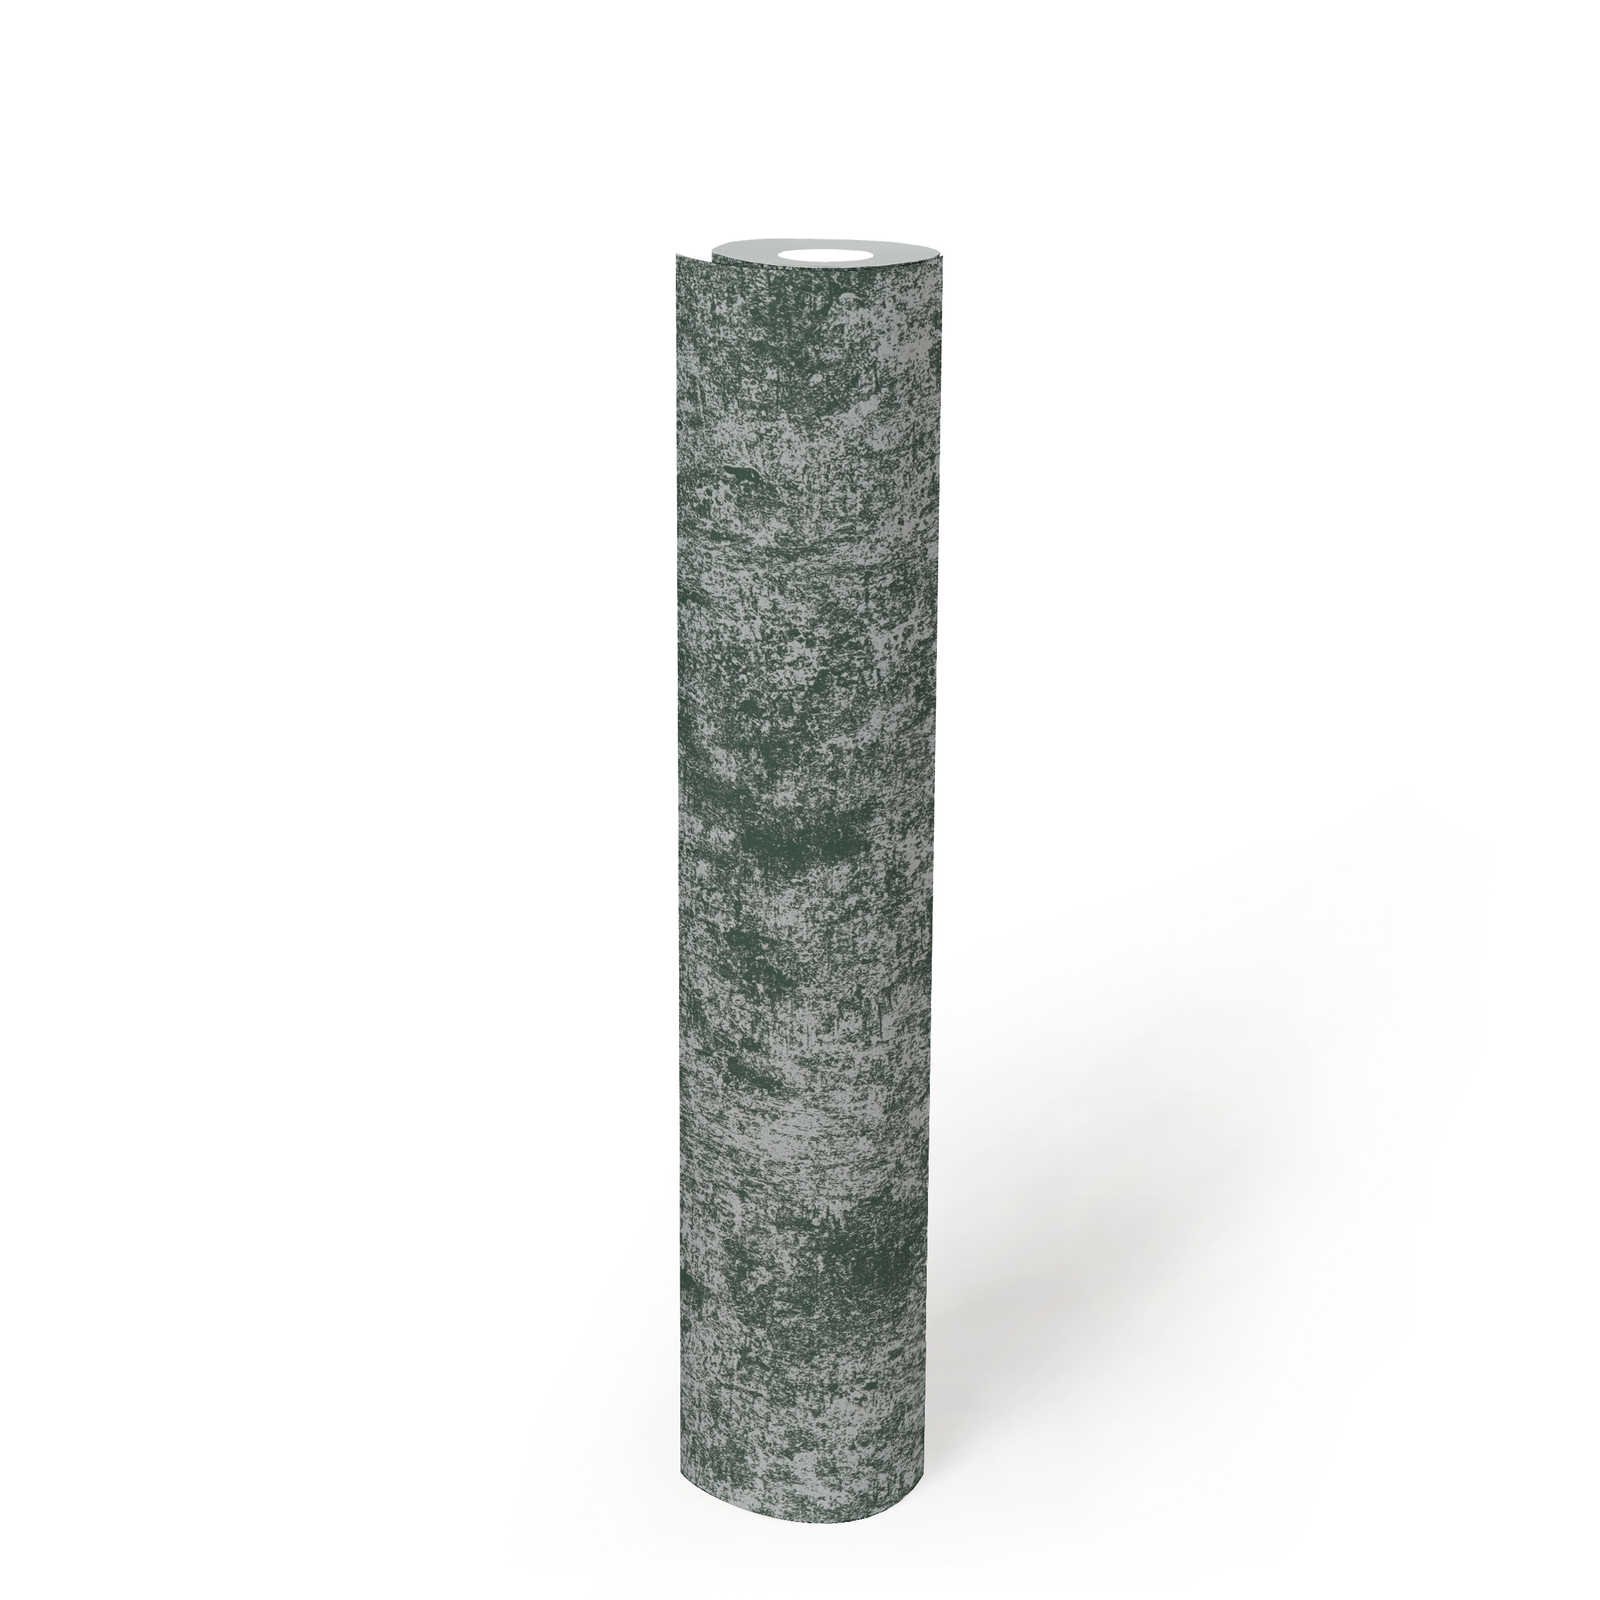             Carta da parati effetto metallo con effetto lucido liscio - verde, argento
        